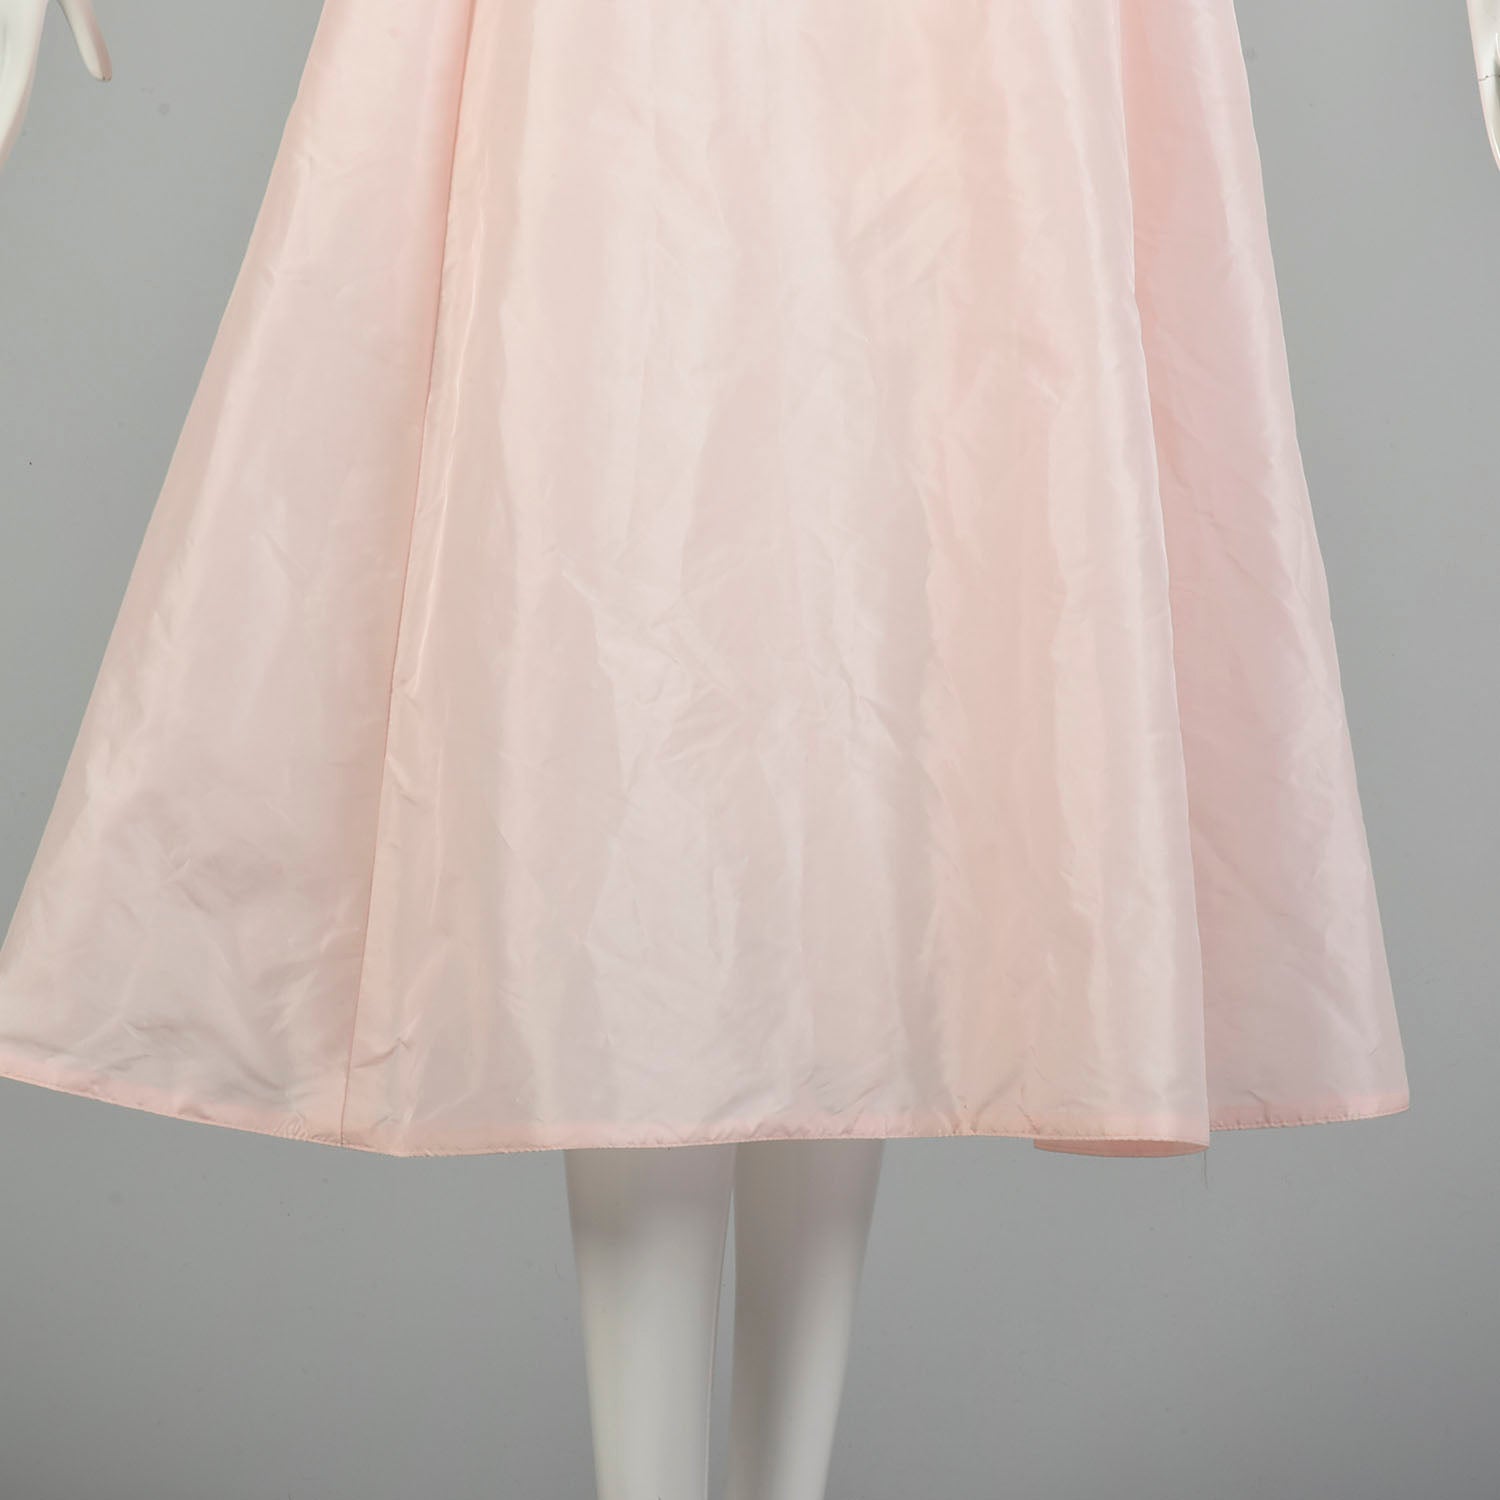 Medium 1980s Pink Party Gown Taffeta Princess Dress Off Shoulder Prom Formal Boned Bodice